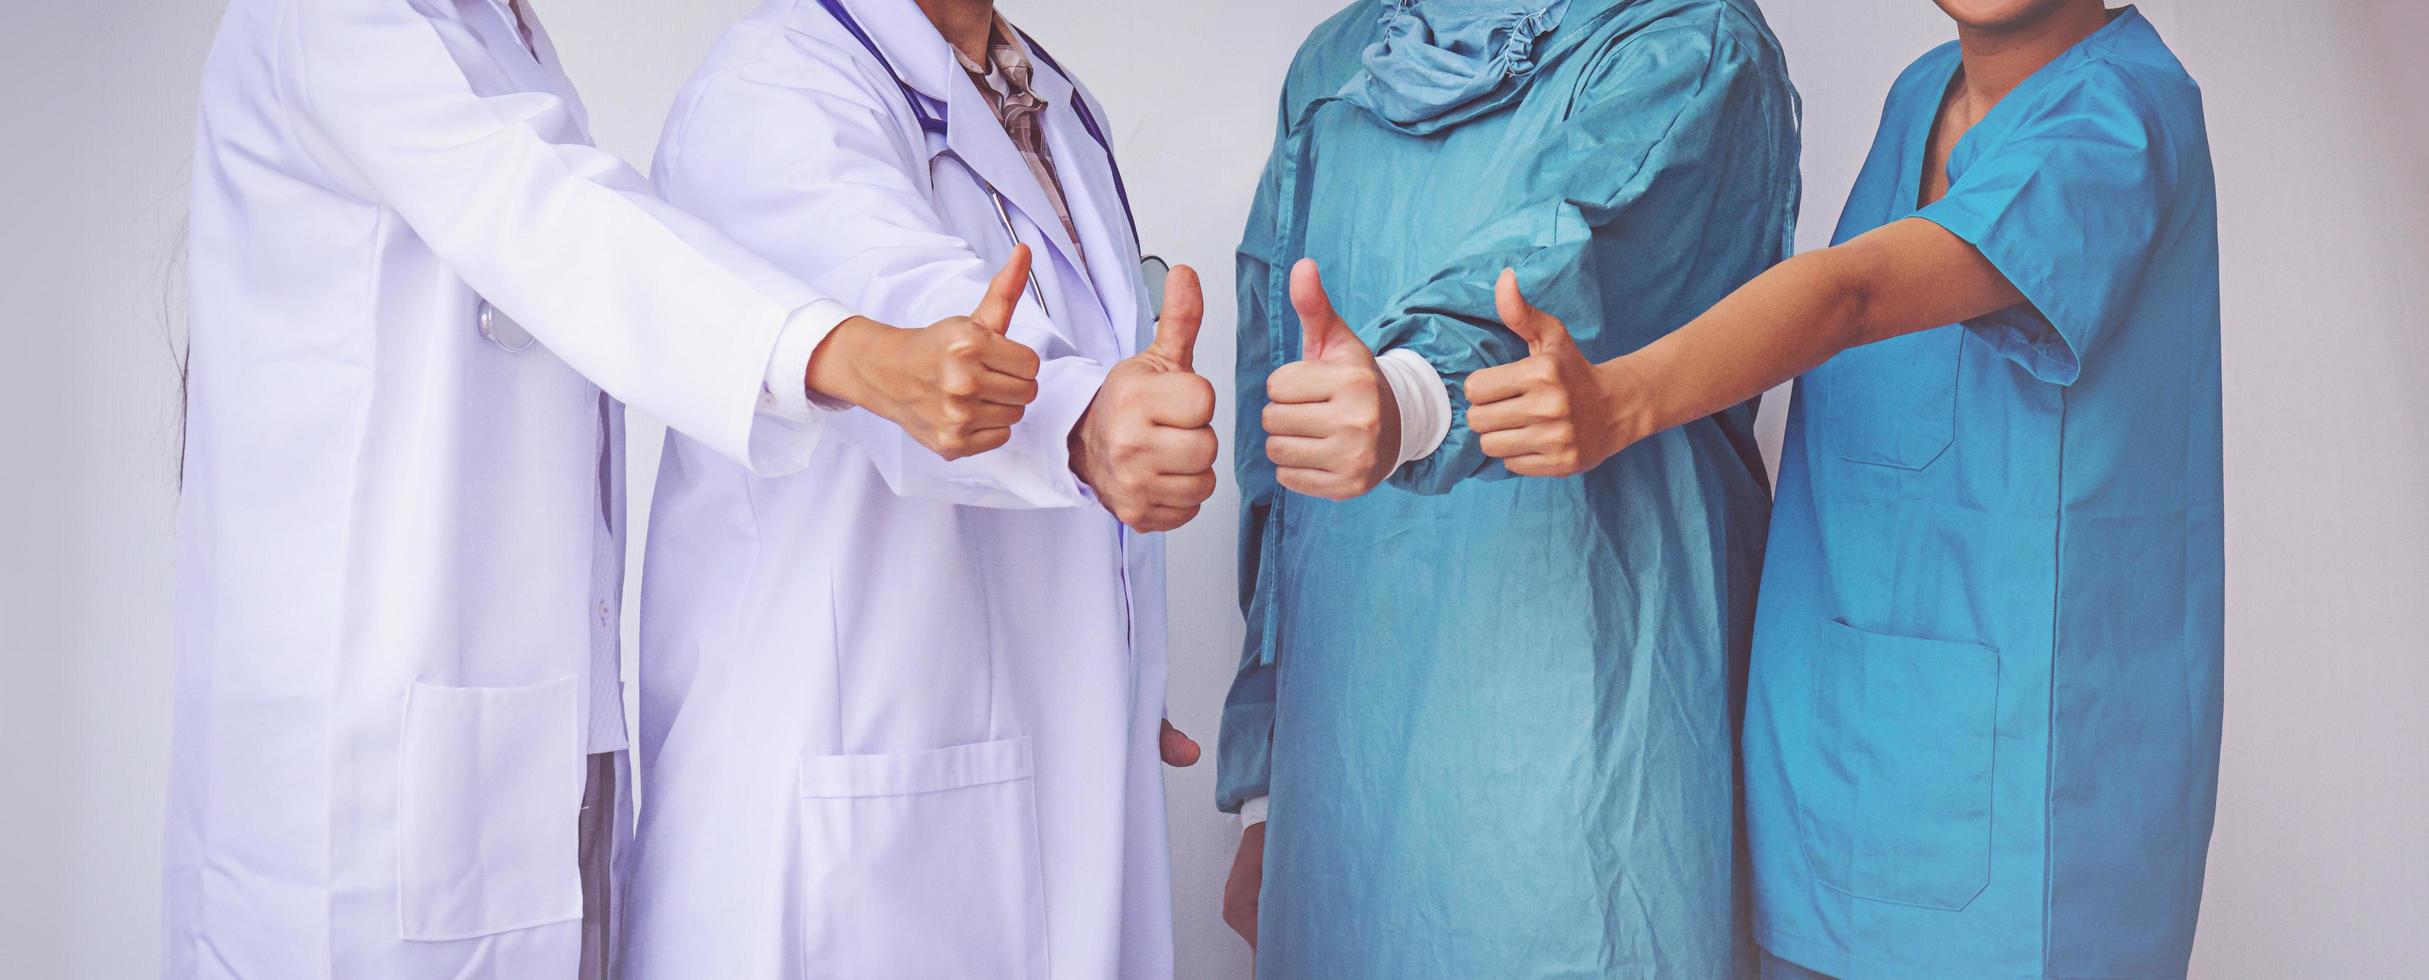 Doctors and Nurses coordinate hands.doctors thumb up, Concept Teamwork photo